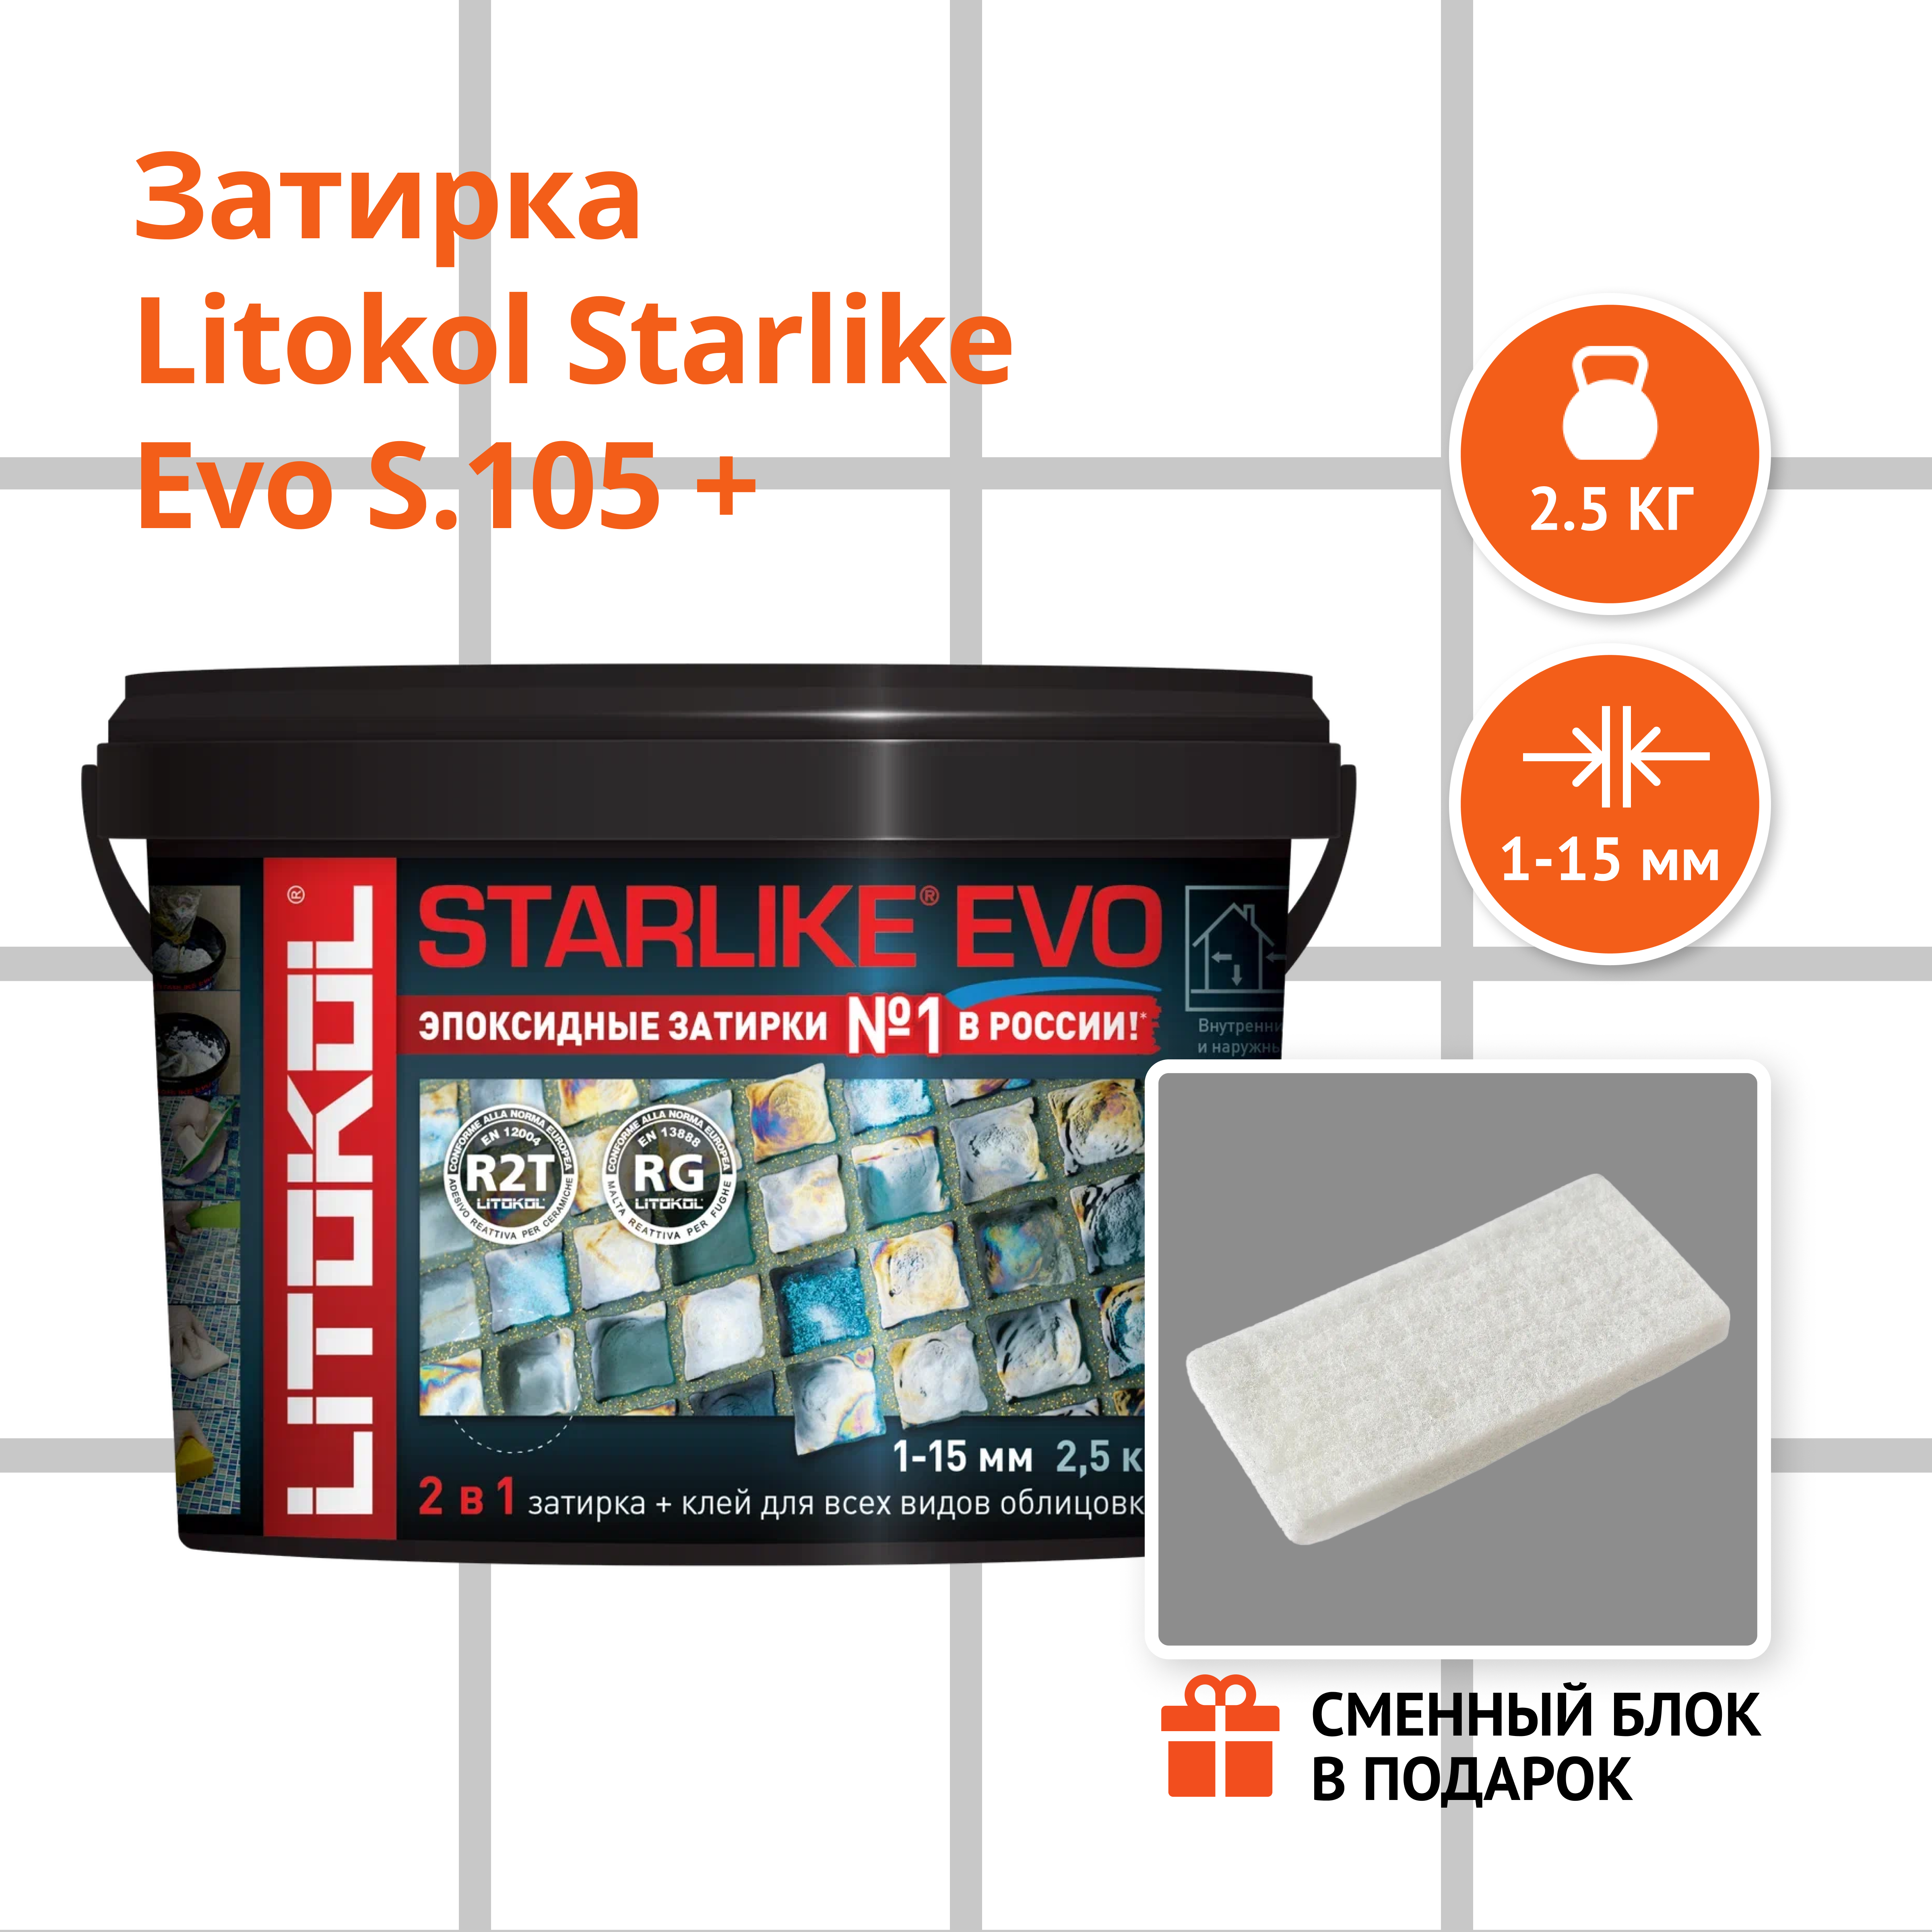 Затирка LITOKOL STARLIKE EVO S.105 BIANCO TITANIO, 2.5 кг + Сменный блок в подарок